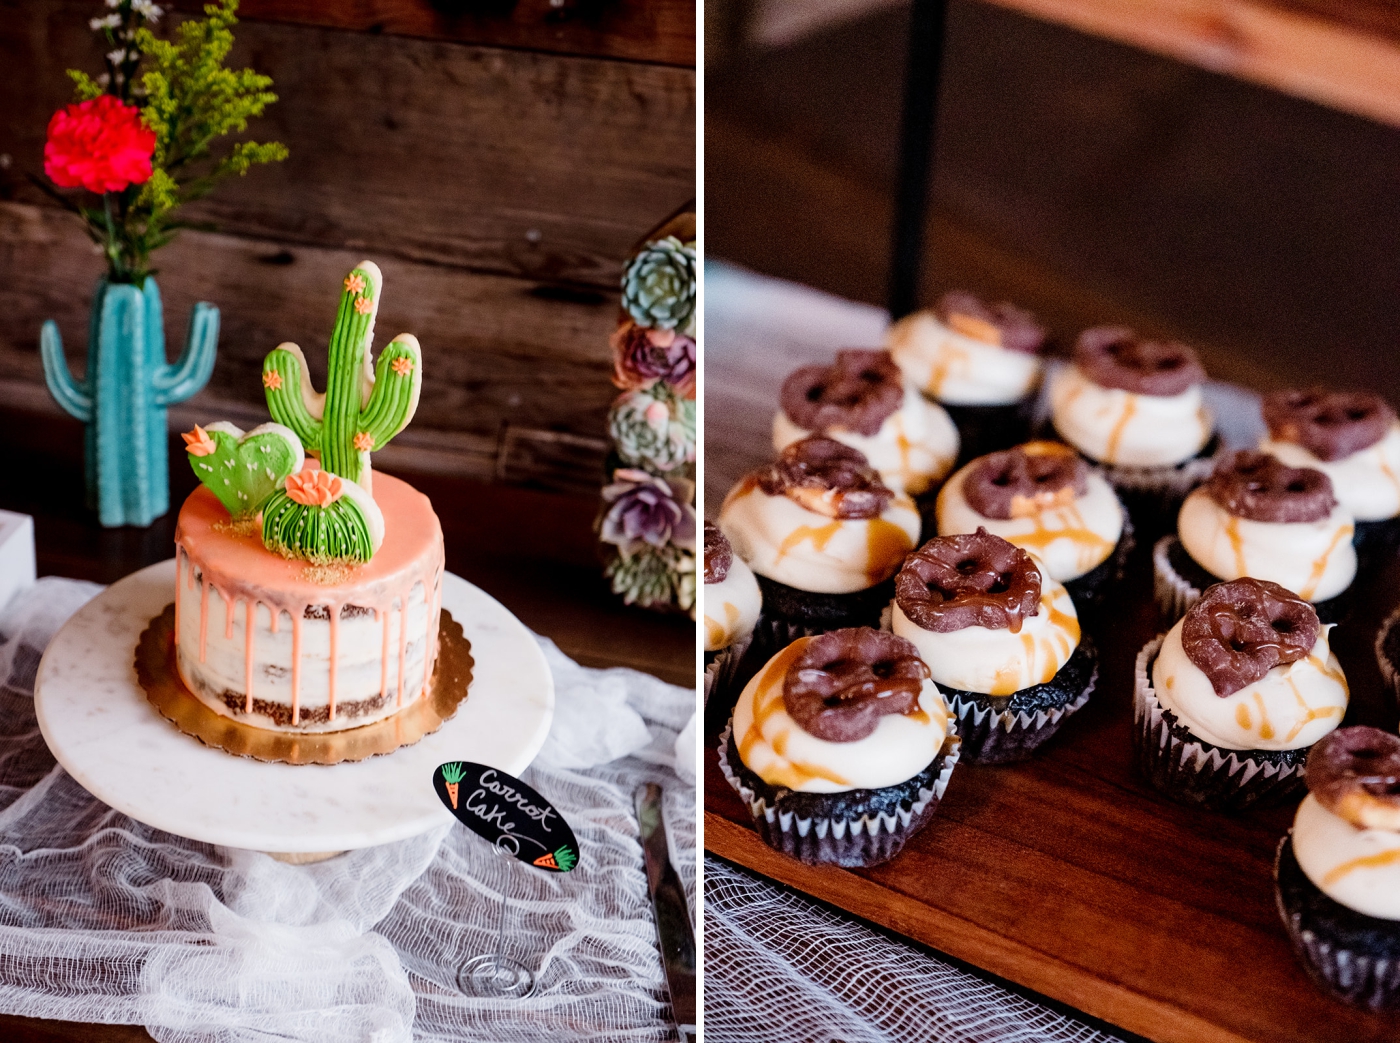 Cactus cookies and wedding cake for a fun Austin Wedding